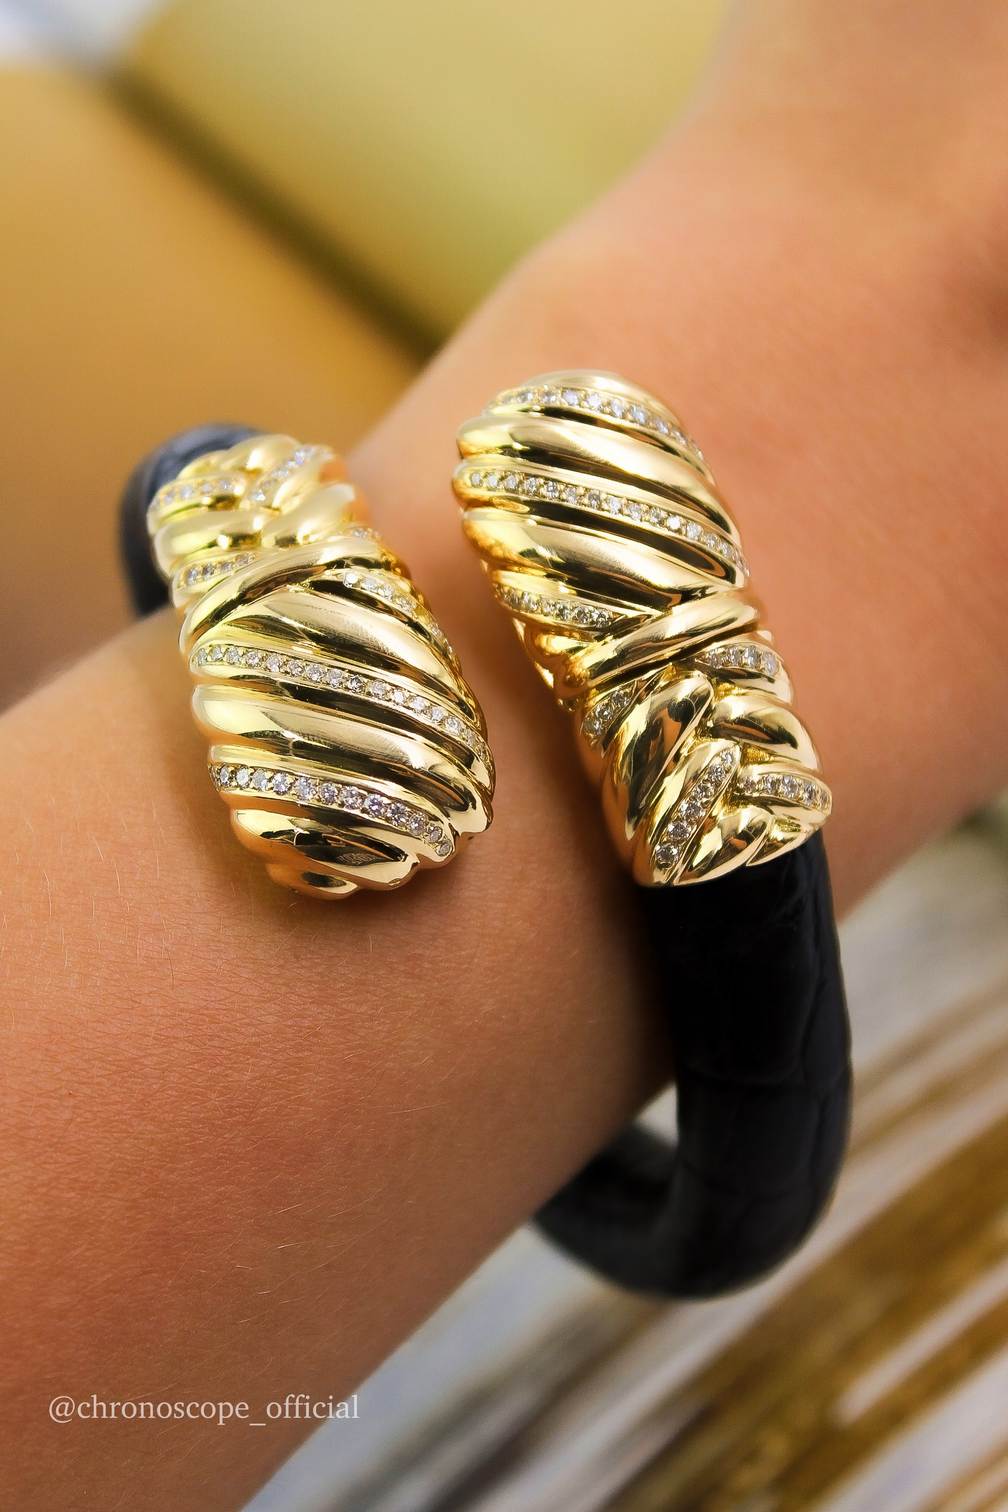 Alexis Barthelay&nbsp;&nbsp;-&nbsp;&nbsp;18kt gold and diamond leather bracelet quartz watch